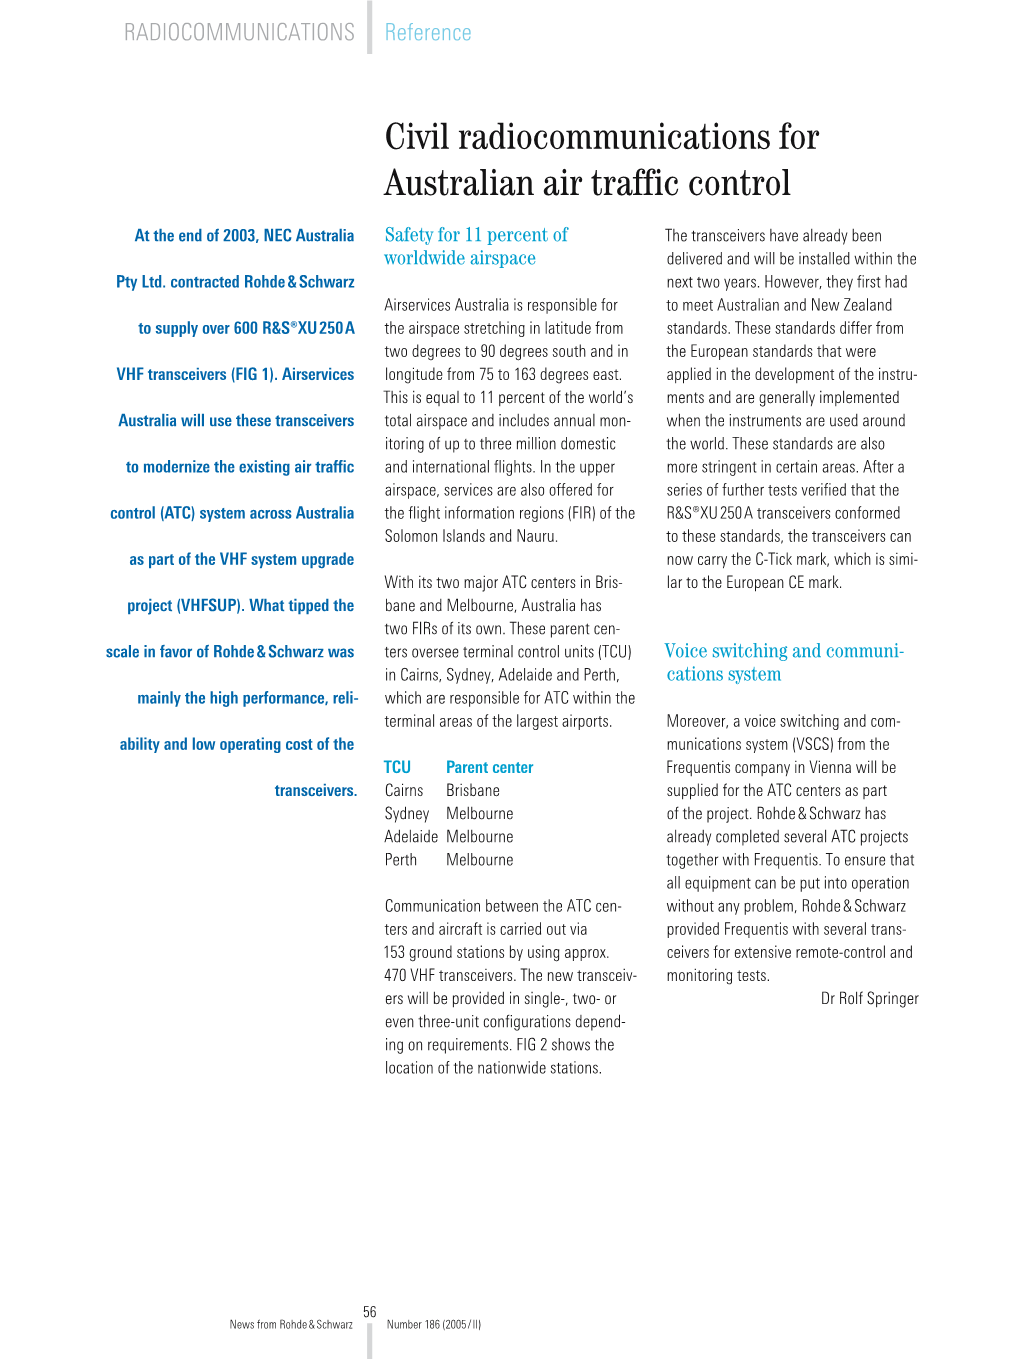 Civil Radiocommunications for Australian Air Traffic Control